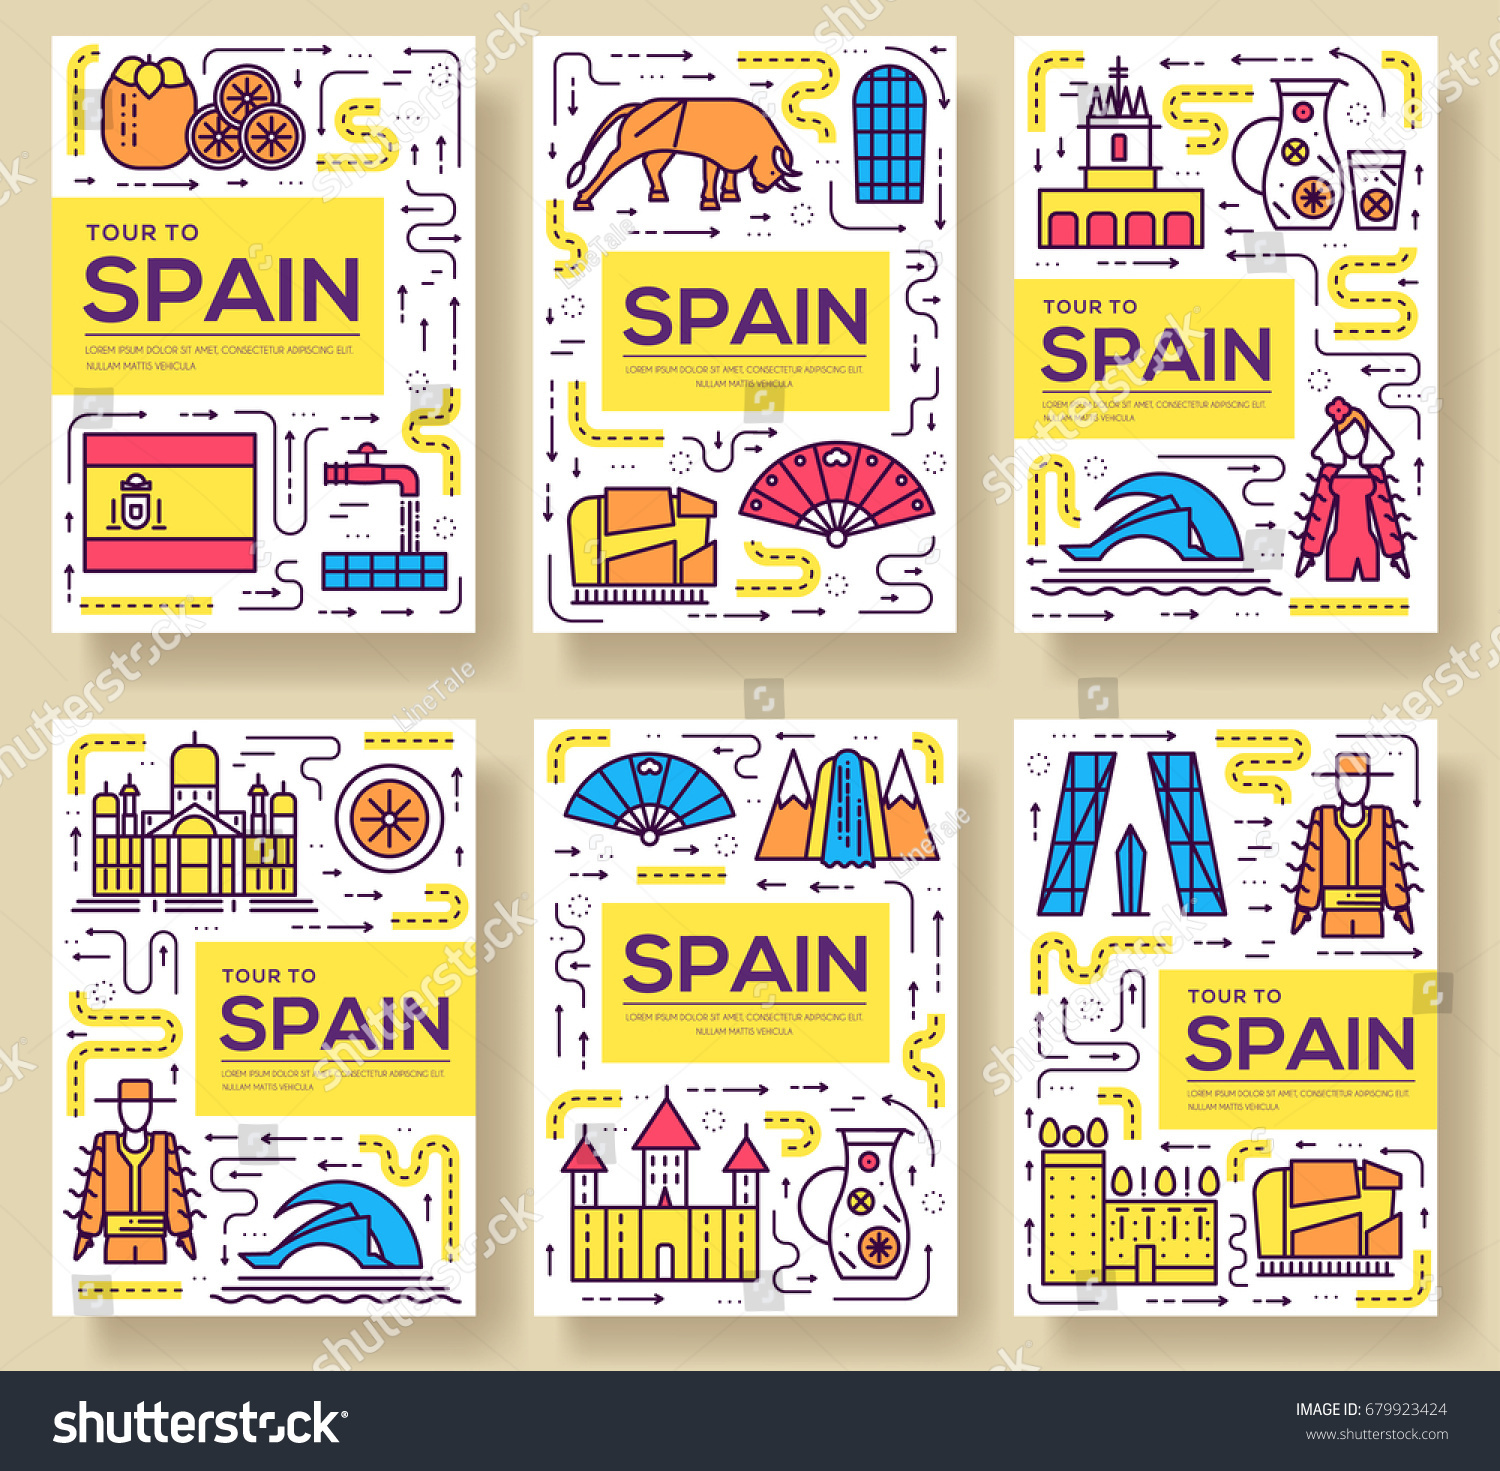 Spain Vector Brochure Cards Thin Line Stock Vector 679923424 - Shutterstock1500 x 1471